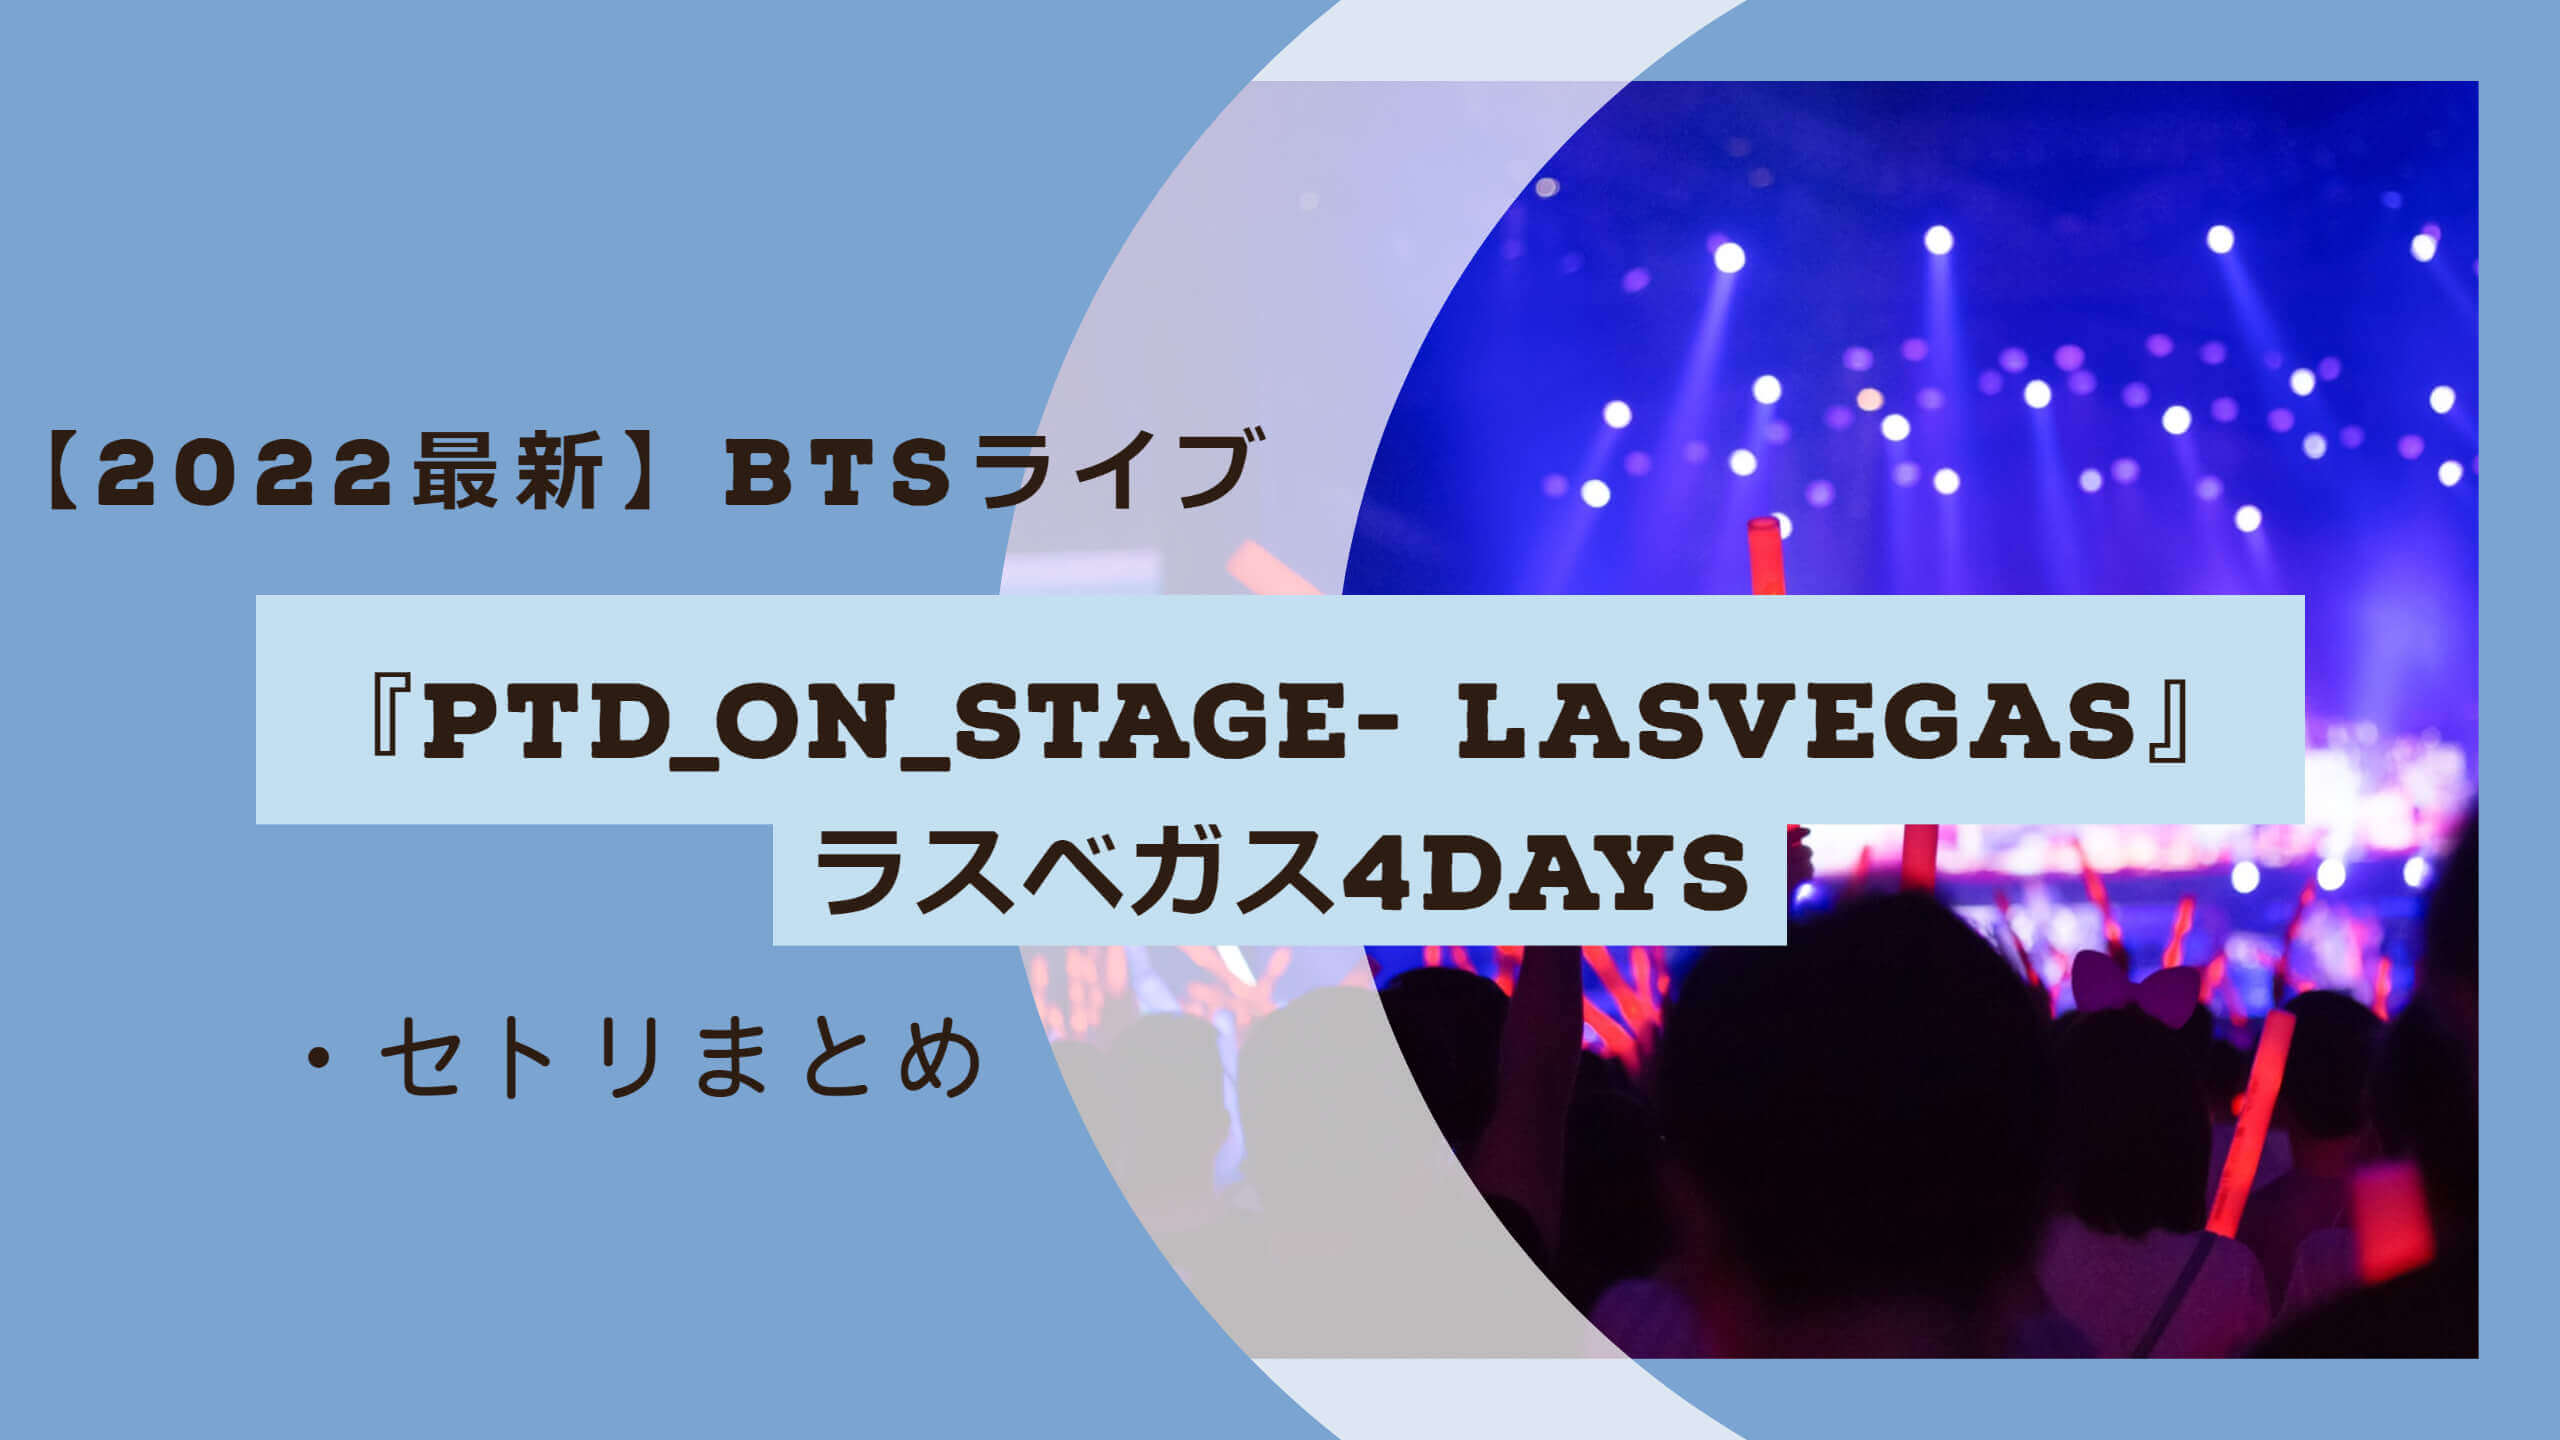 【2022】BTSライブ『PTD_ON_STAGE- LASVEGAS』ラスベガス4DAYS・セトリ «